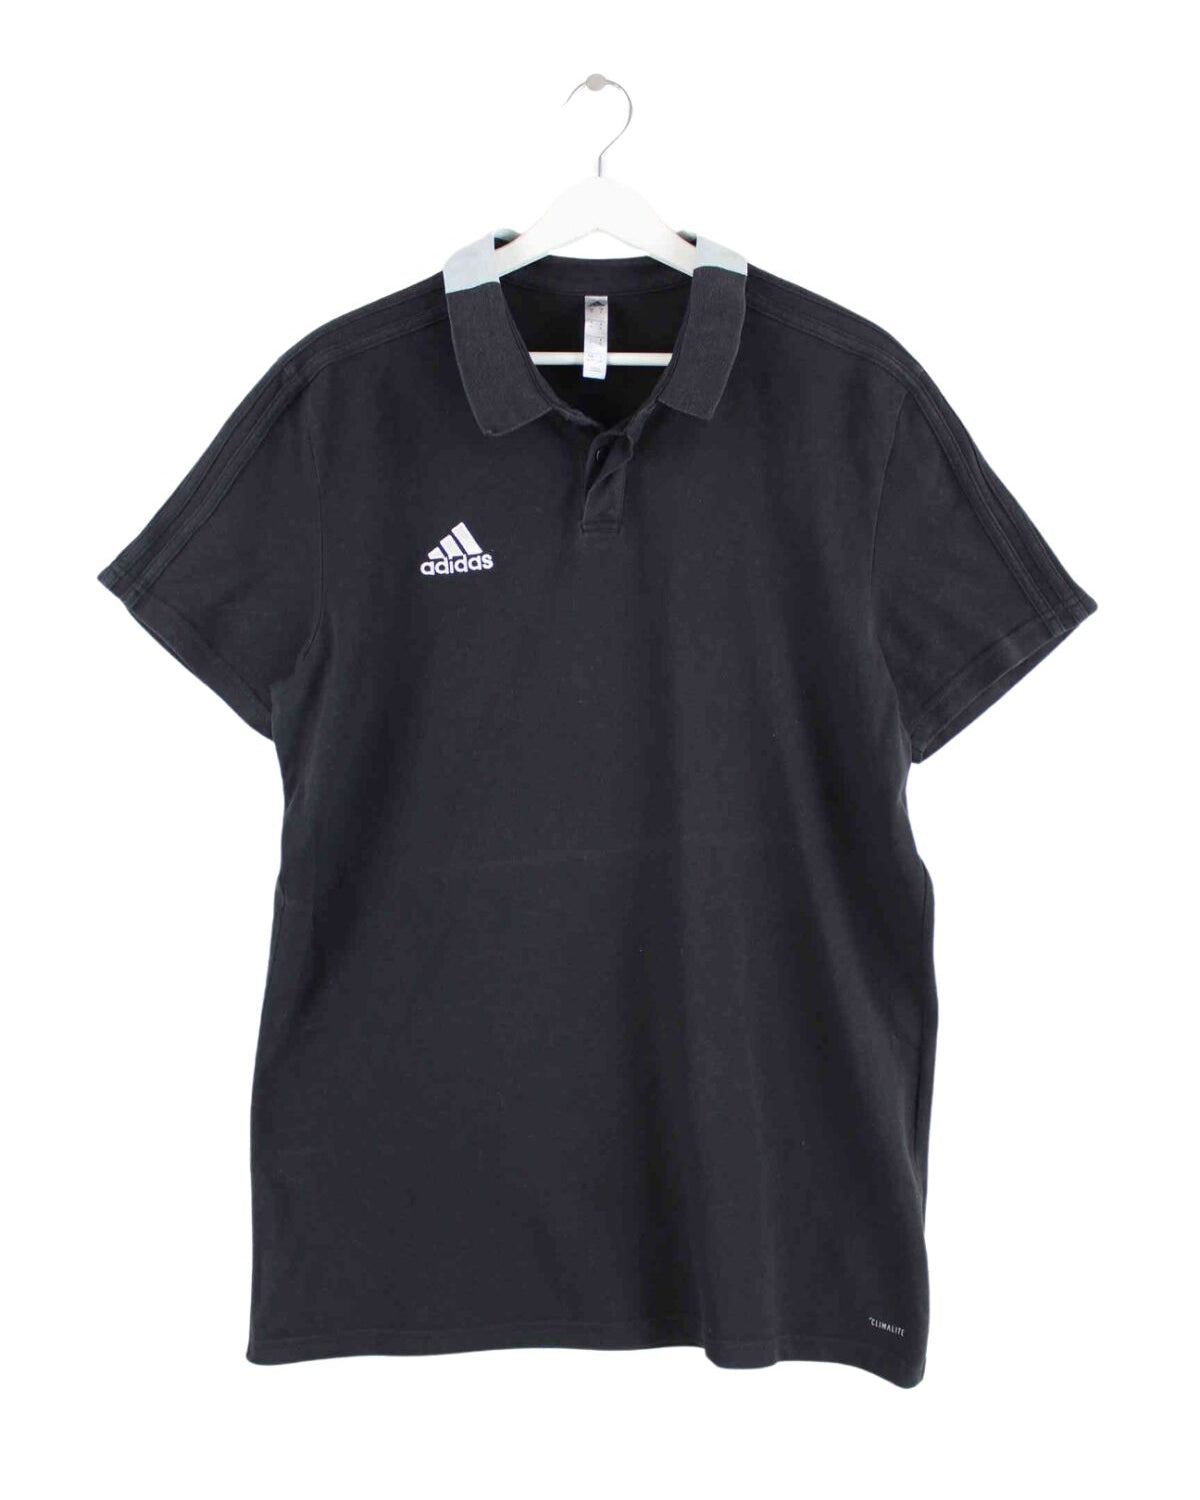 Adidas Polo Schwarz XL (front image)